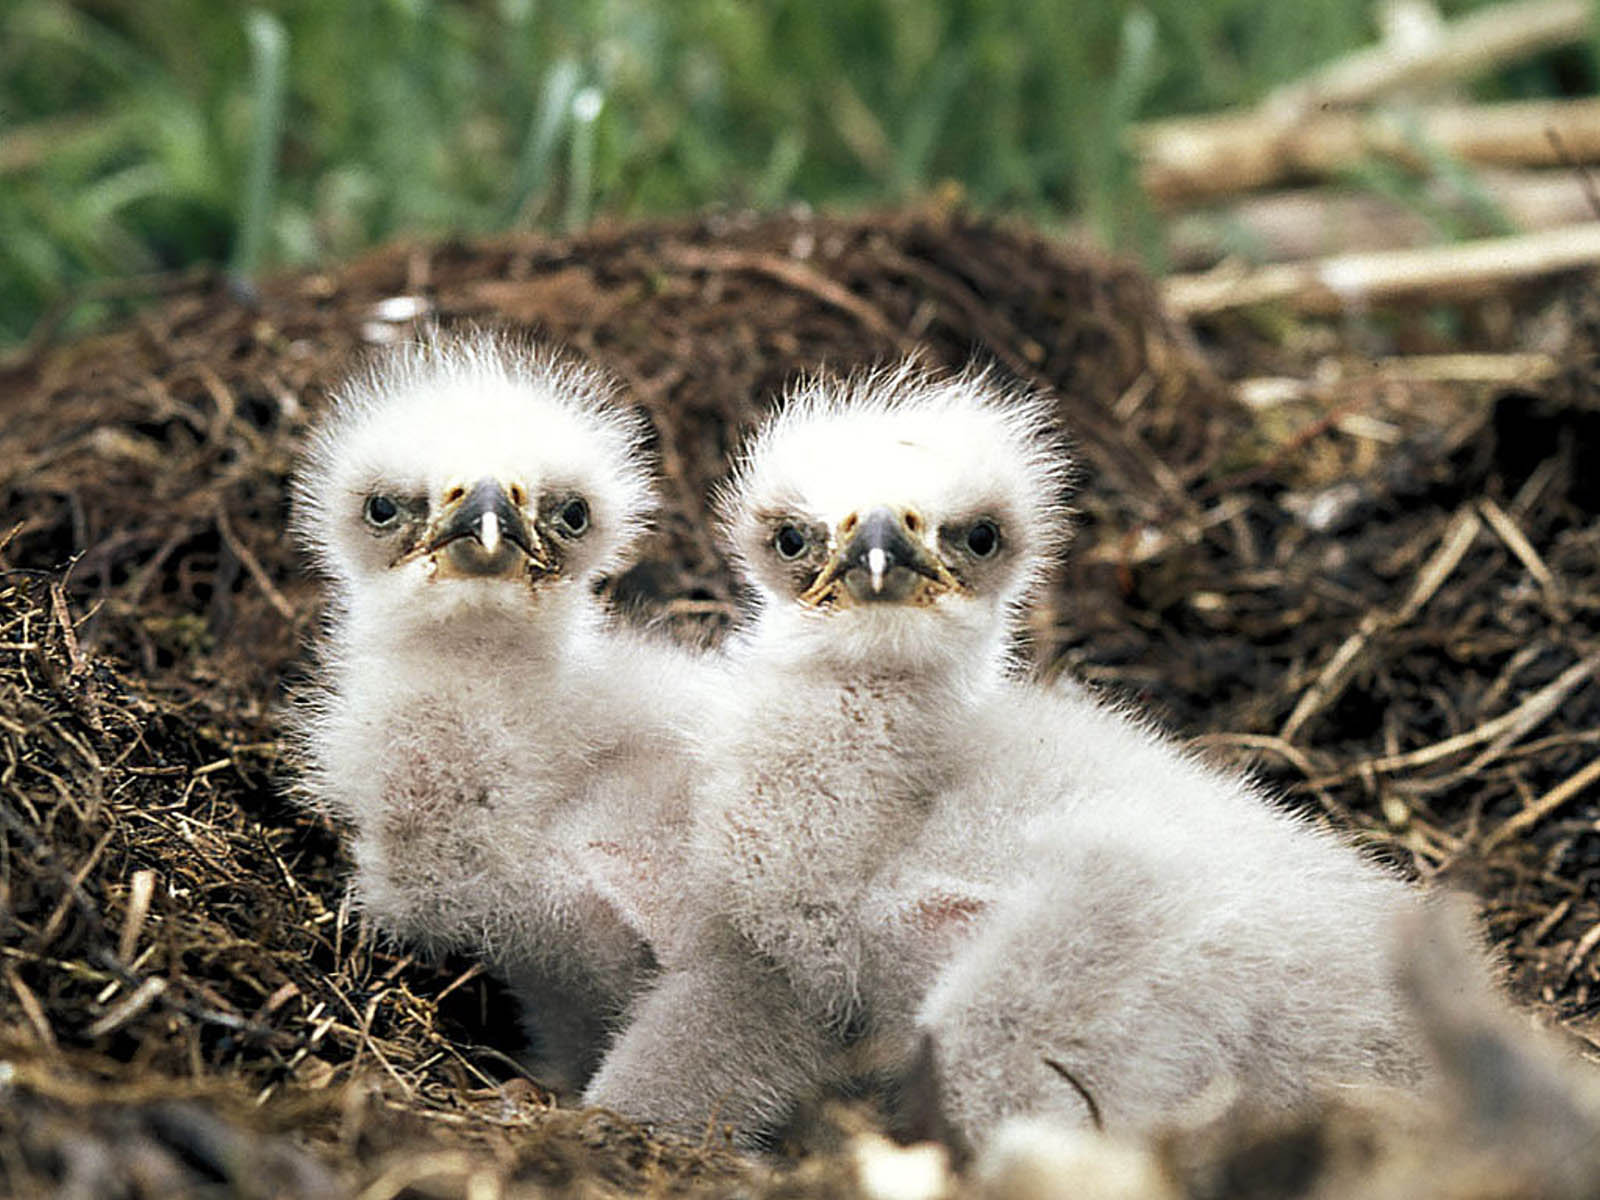 Bald Eagle Chicks